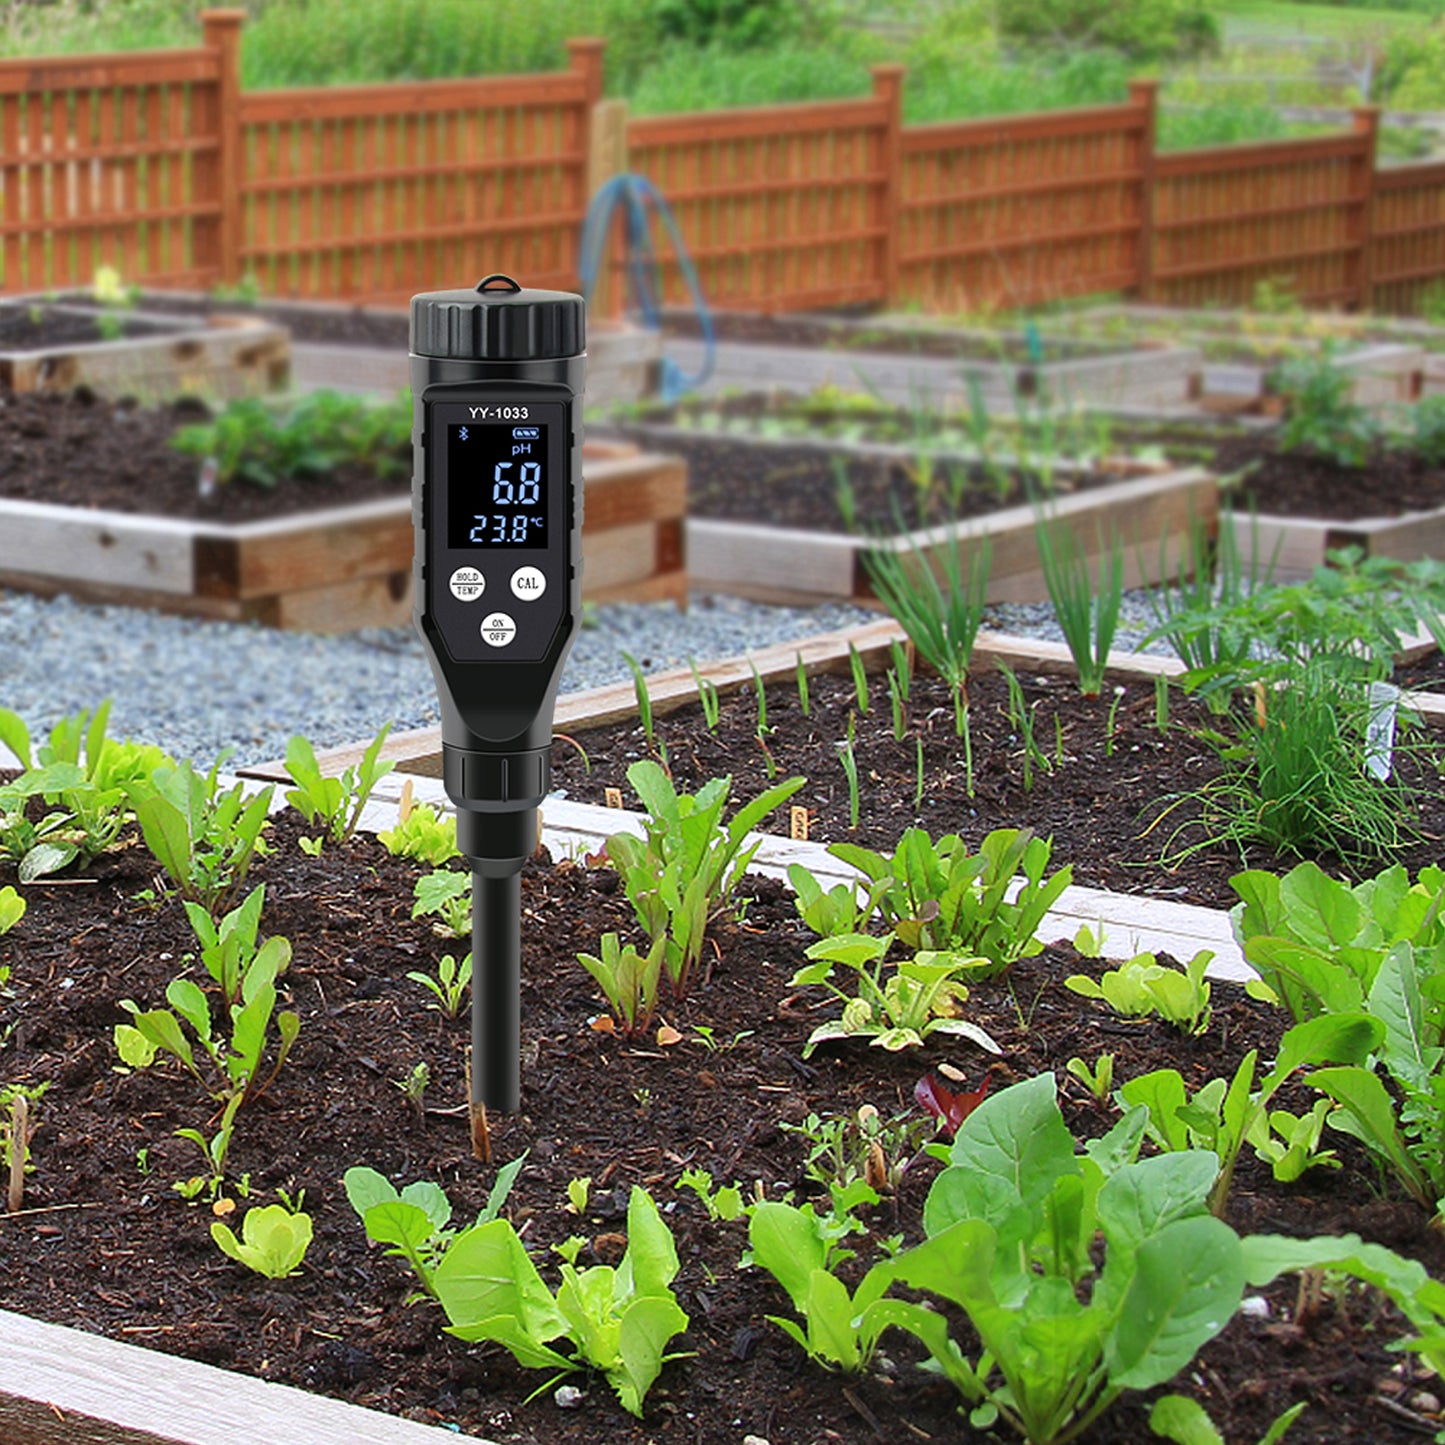 YIERYI Soil pH Meter, Digital Soil pH Tester for Hydroponics, Garden, Lawn, Agriculture, Farm